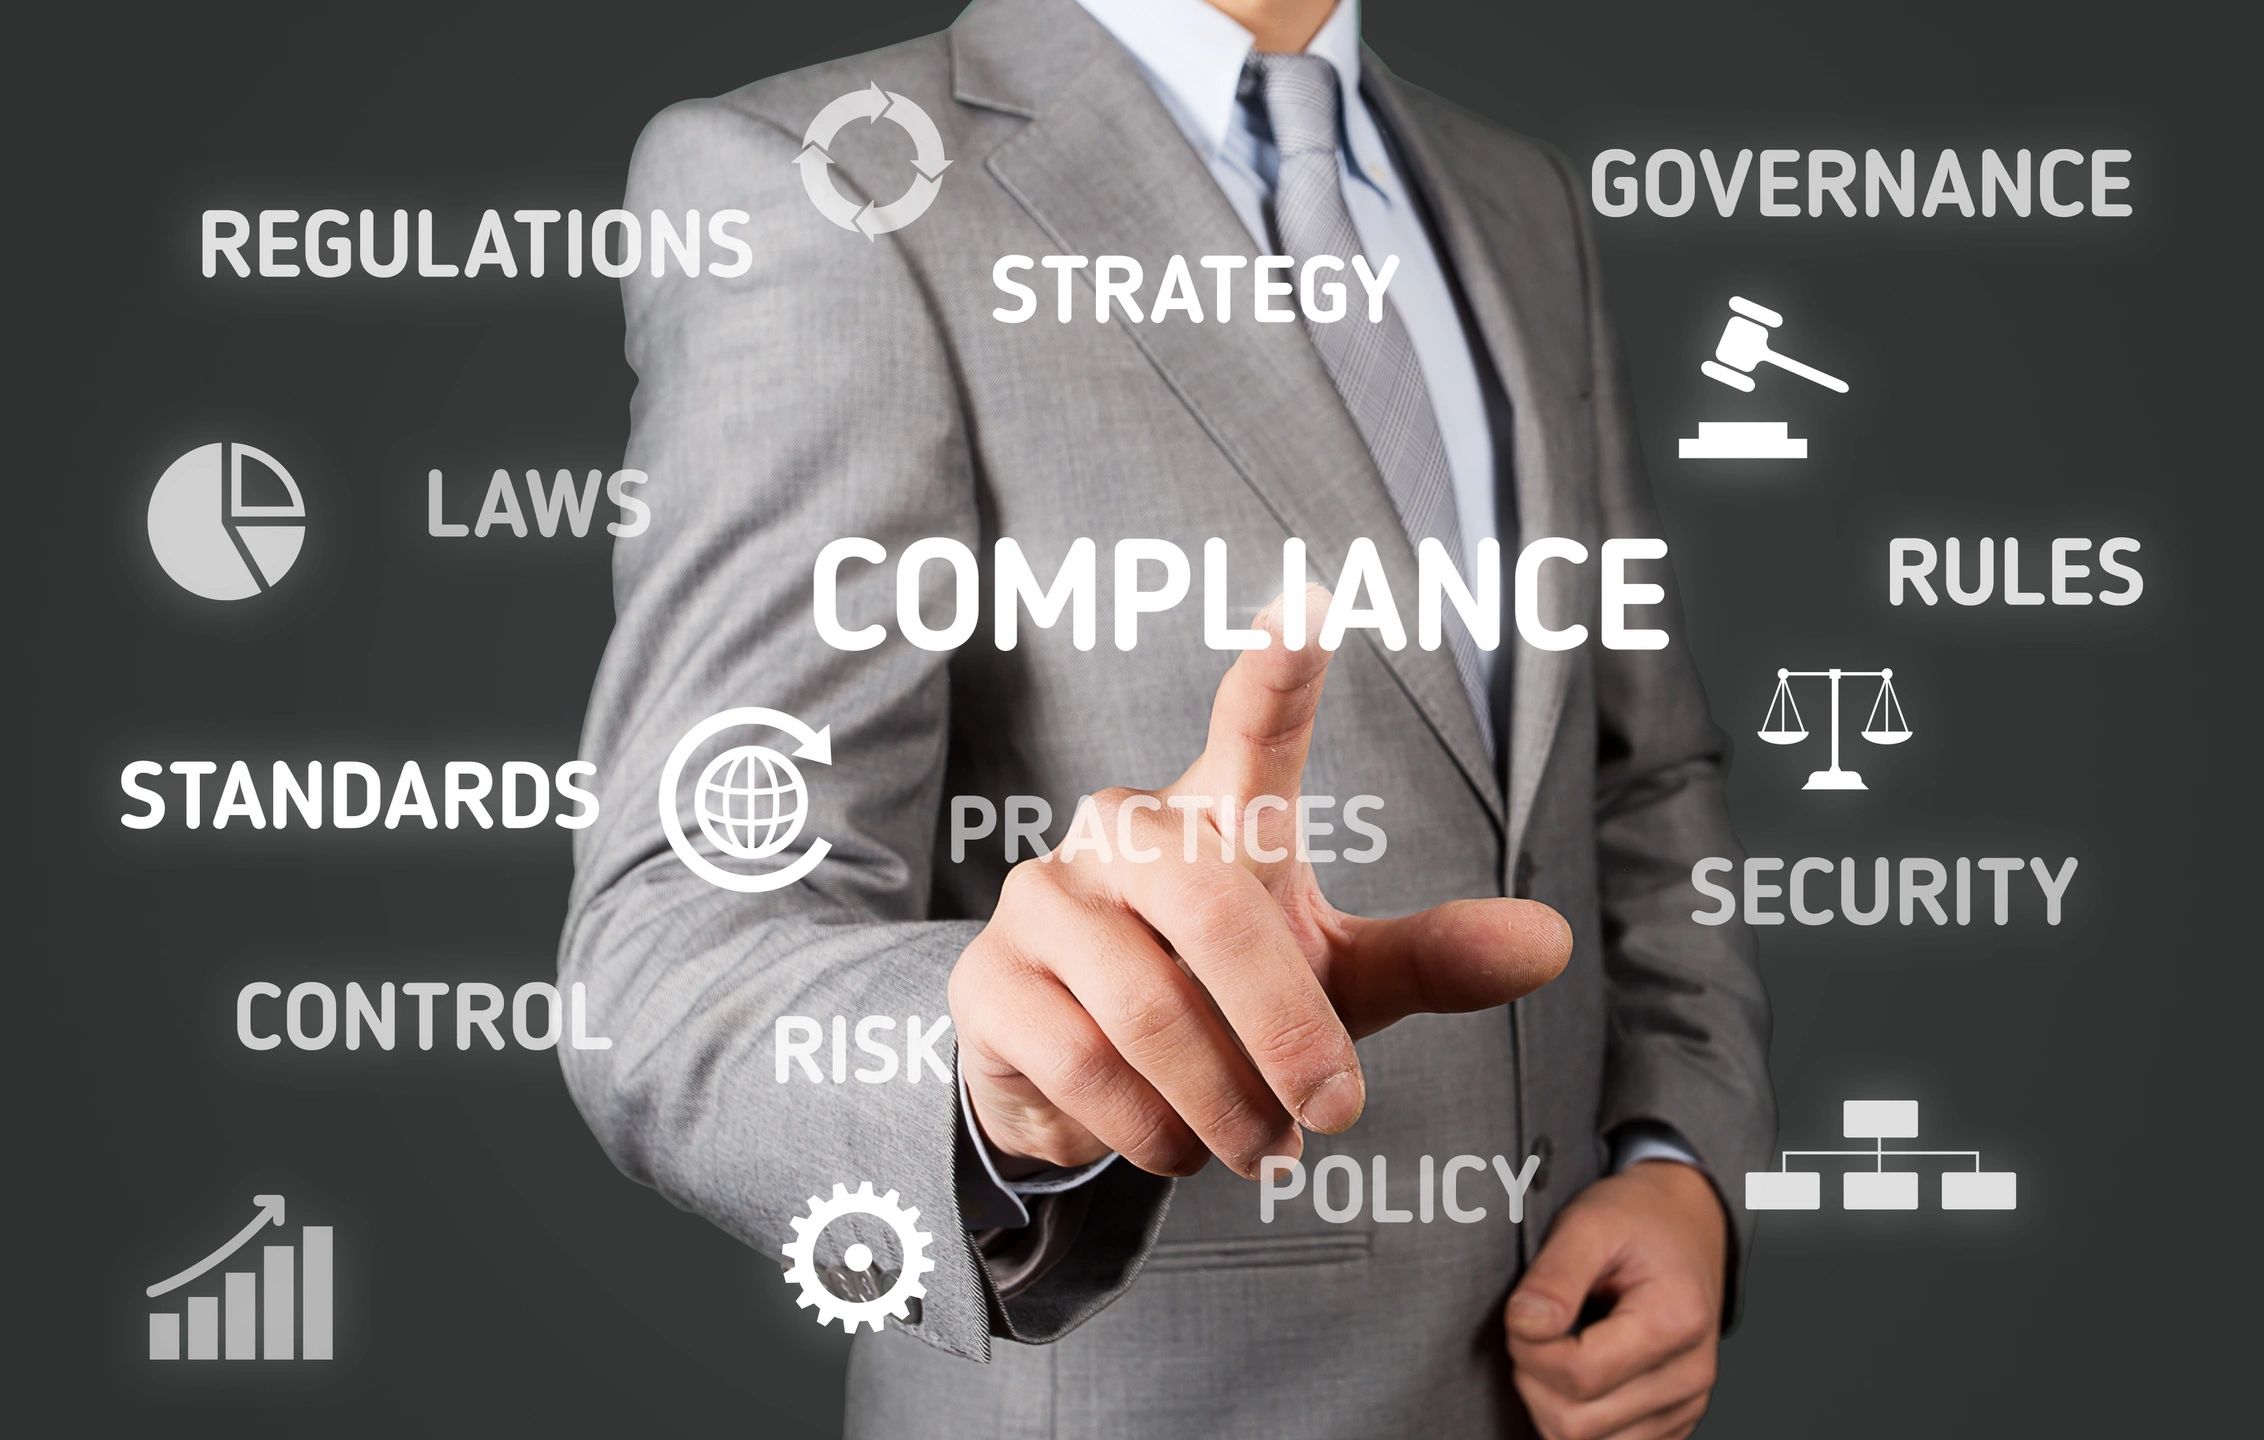 Regulatory compliance and vendor management programs require periodic risk assessment and vendor audits.